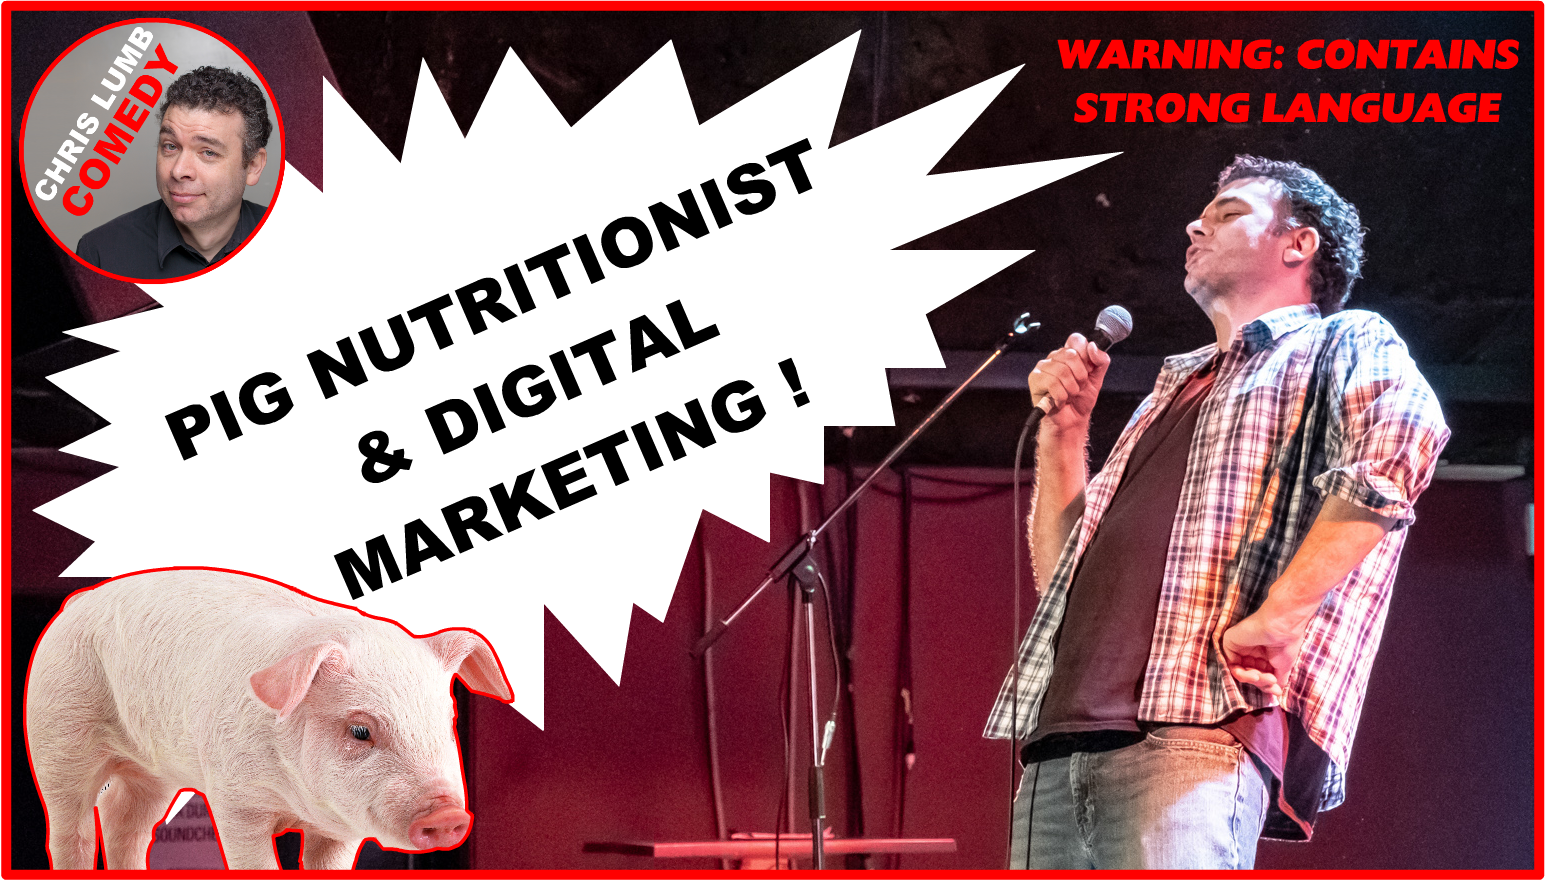 Chris Lumb Comedy "Pig Nutritionist & Digital Marketing"